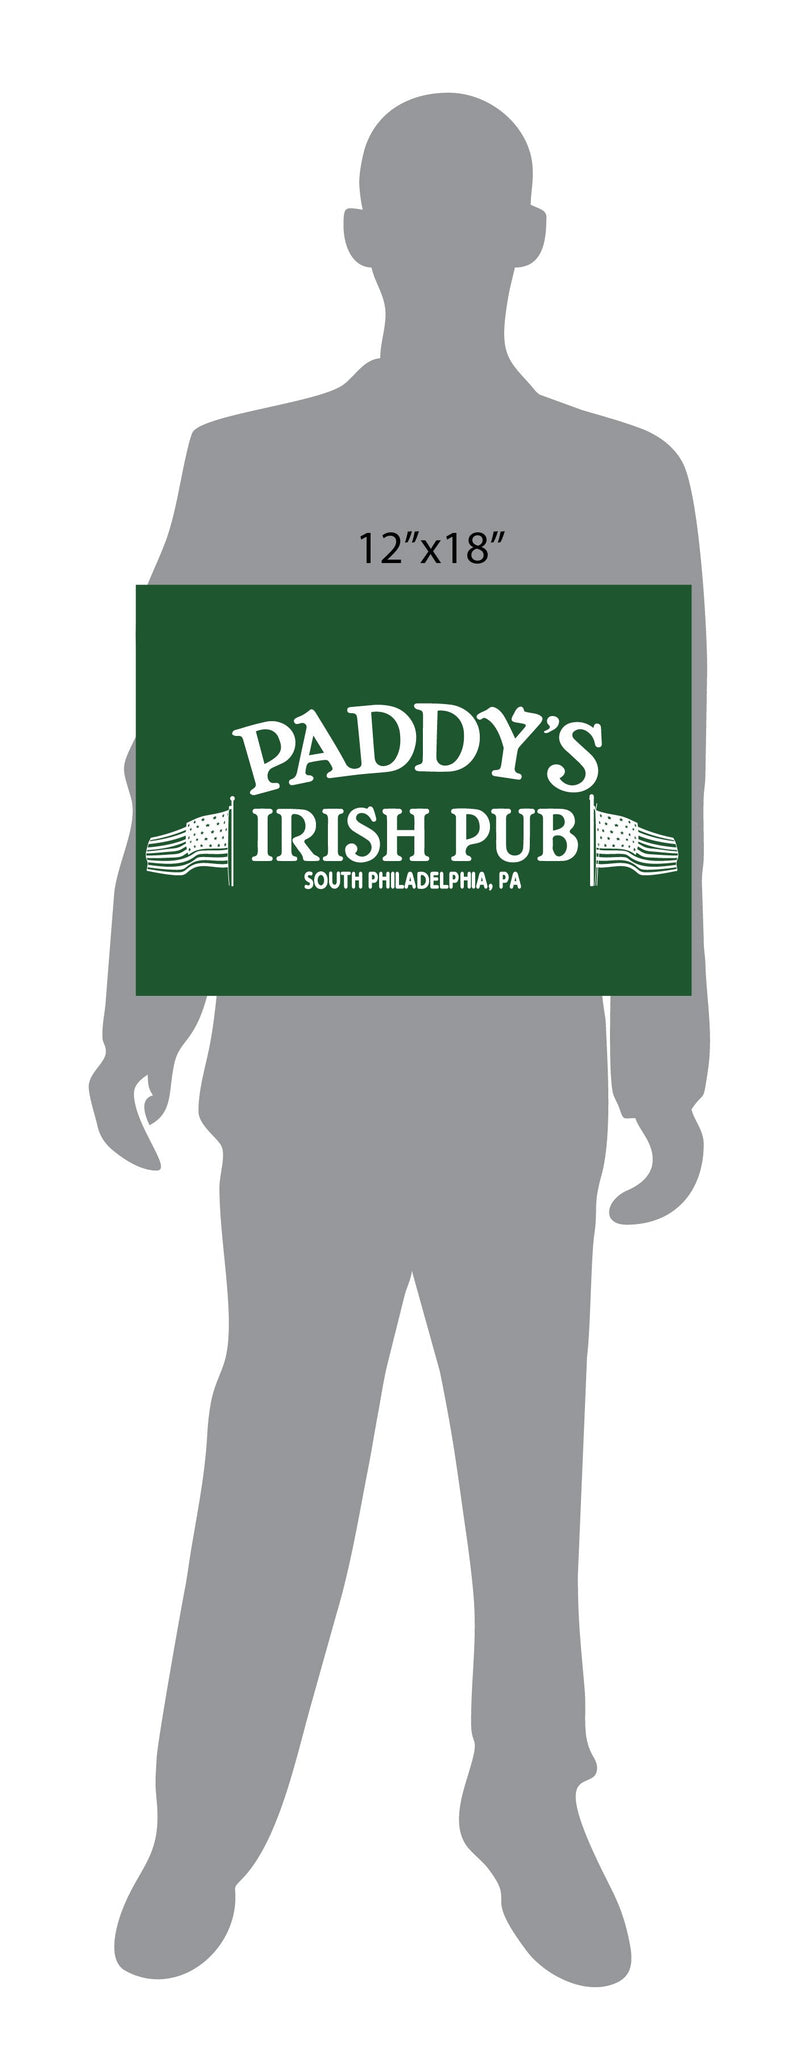 Paddy's Irish Pub It's Always Sunny in Philadelphia Sign